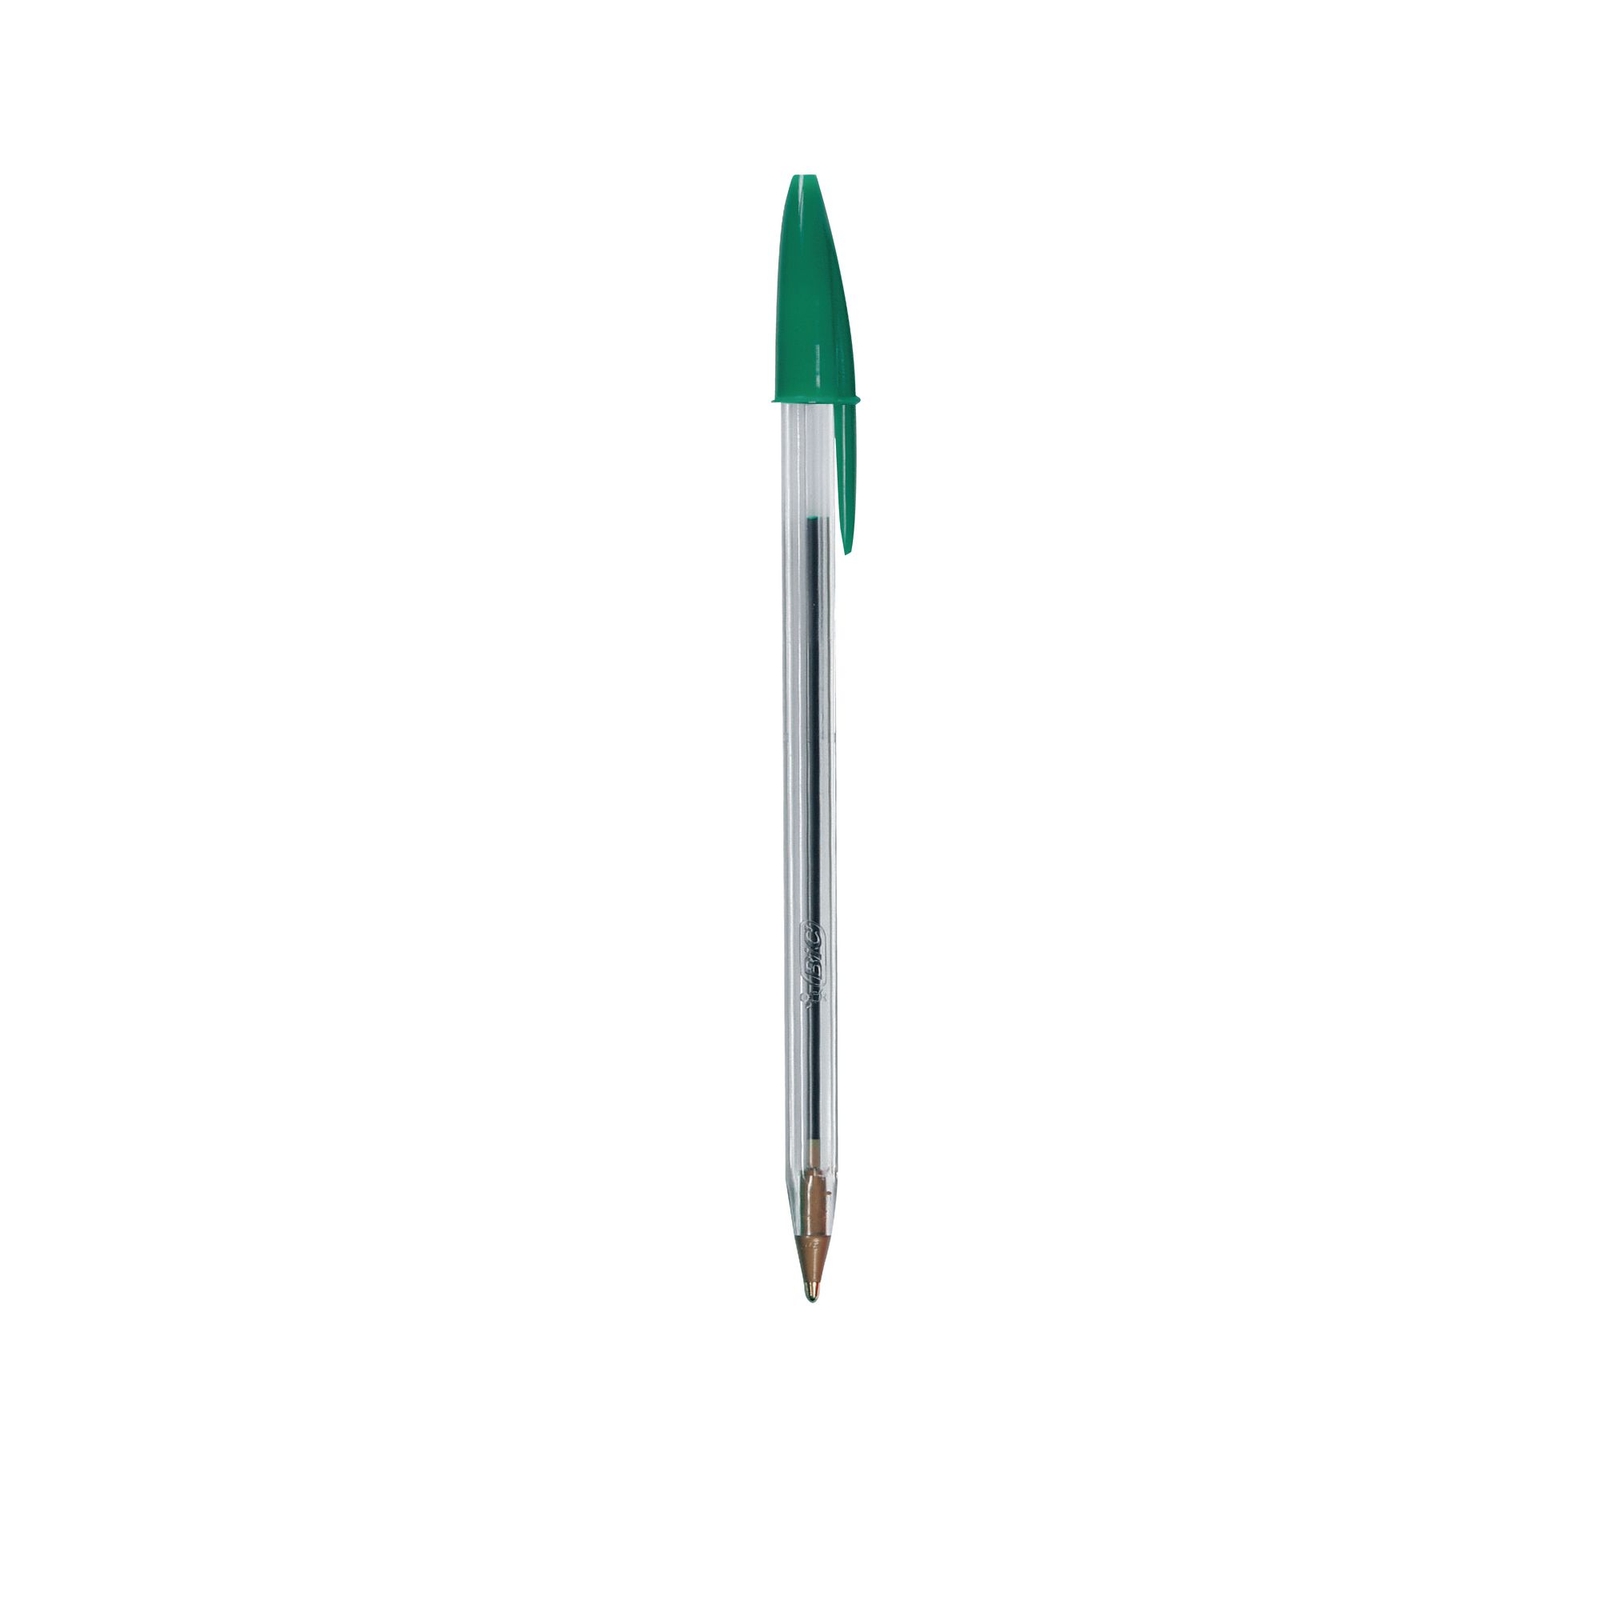 Bic Cristal Green Ballpoint Pen - 1.0mm Medium Nib - Pack of 50